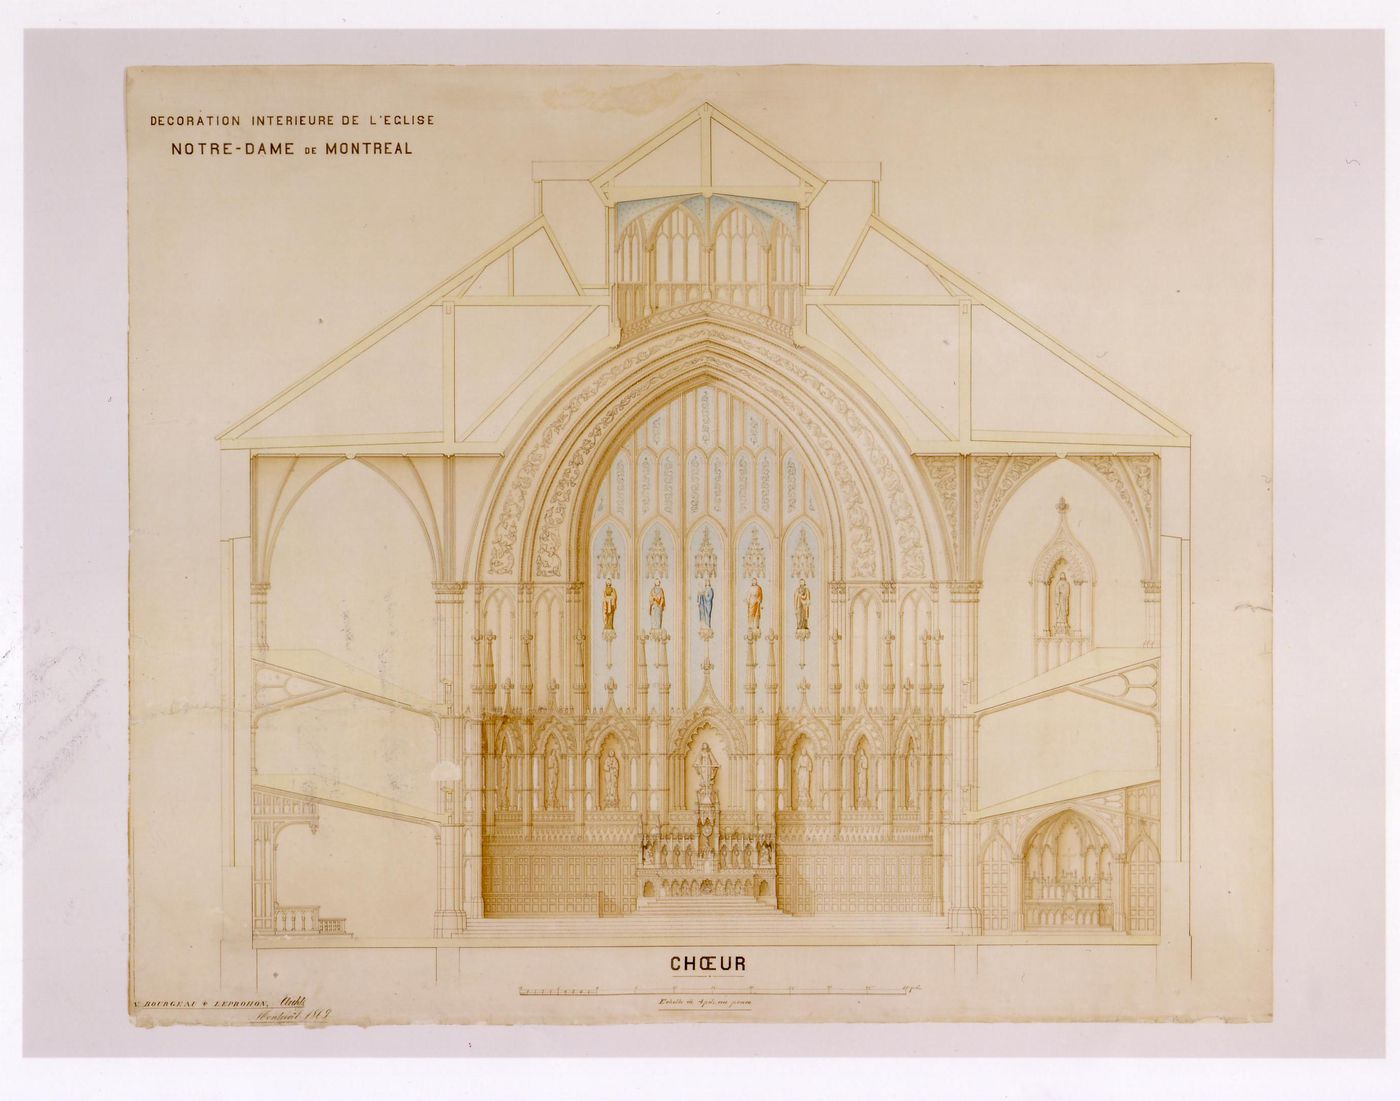 Sectional elevation for the choir for the interior design by Bourgeau et Leprohon for Notre-Dame de Montréal